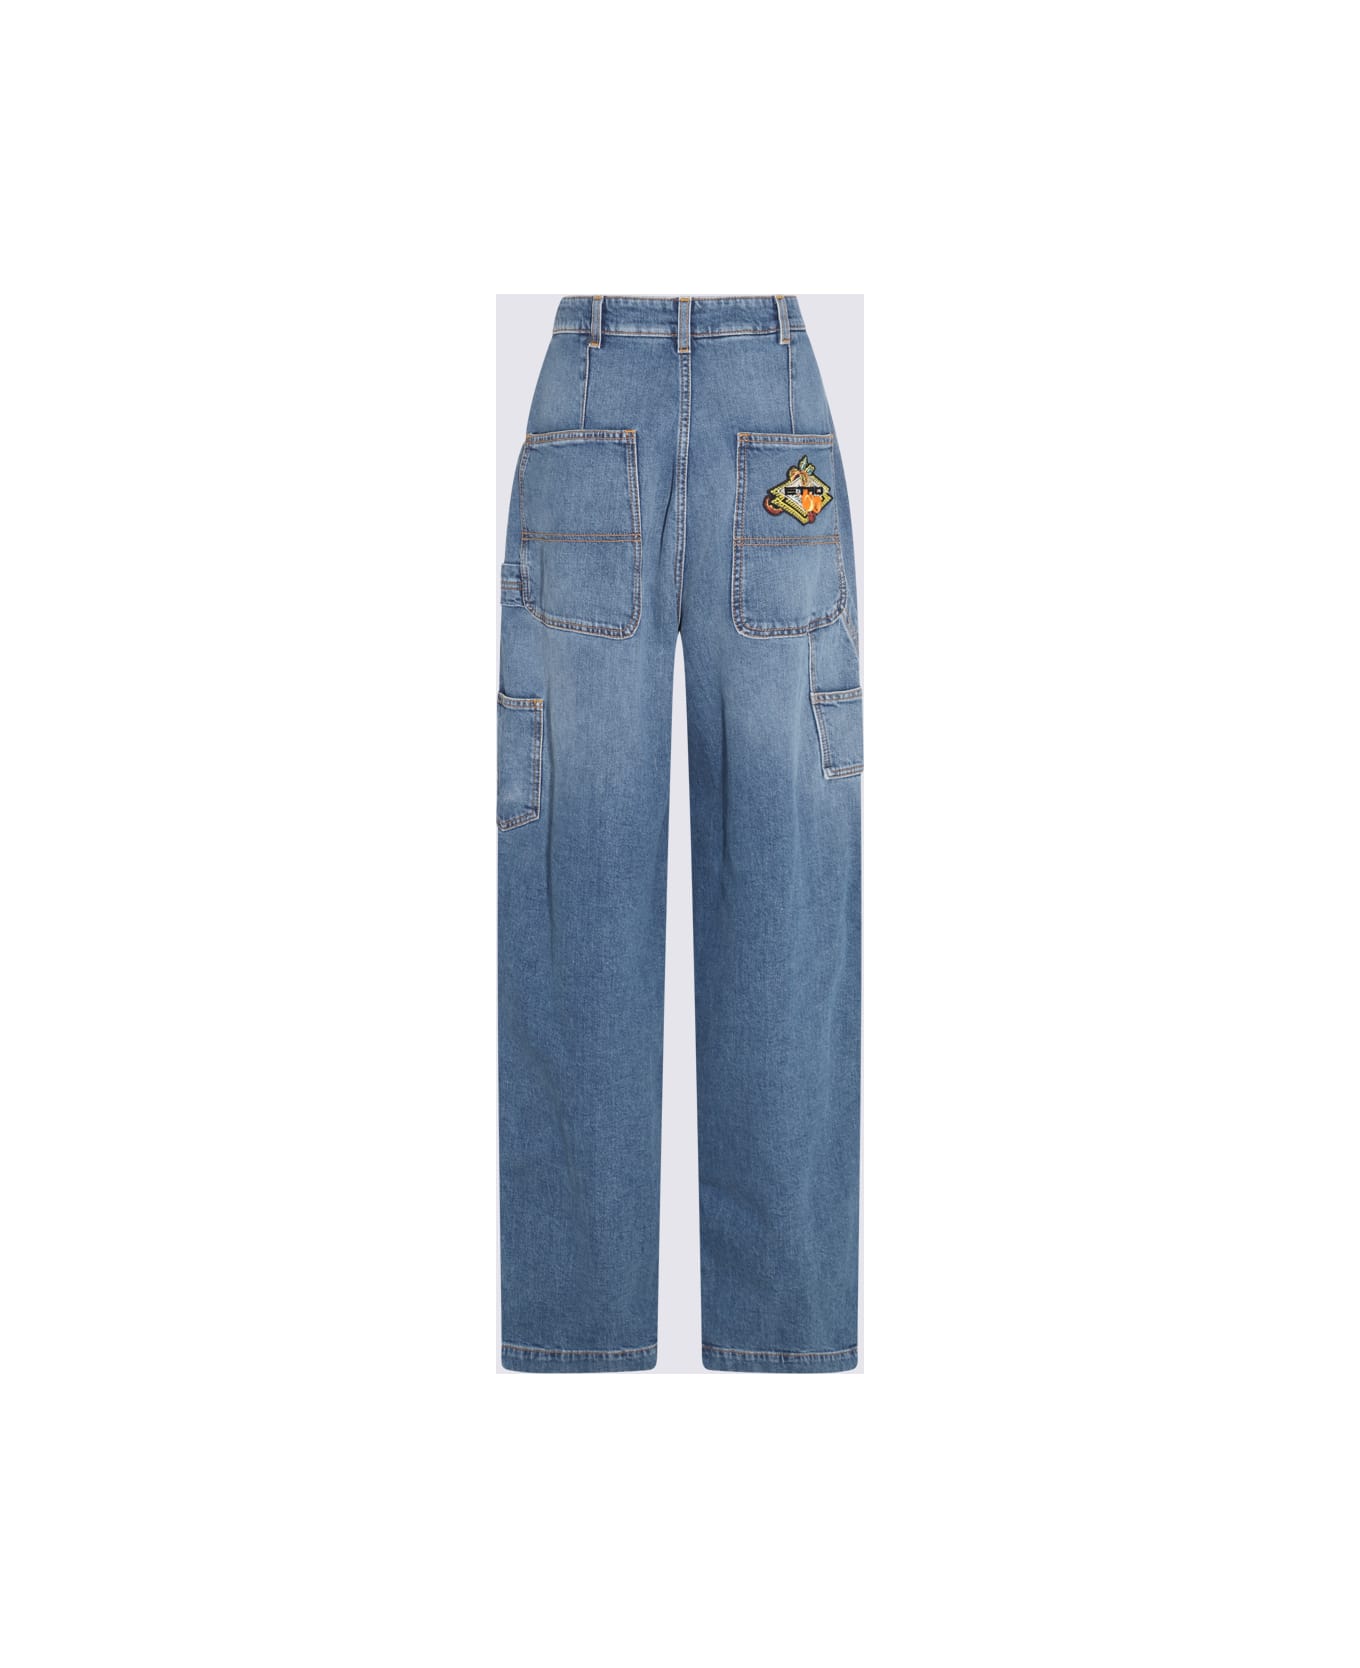 Etro Blue Denim Cotton Jeans - Yellow